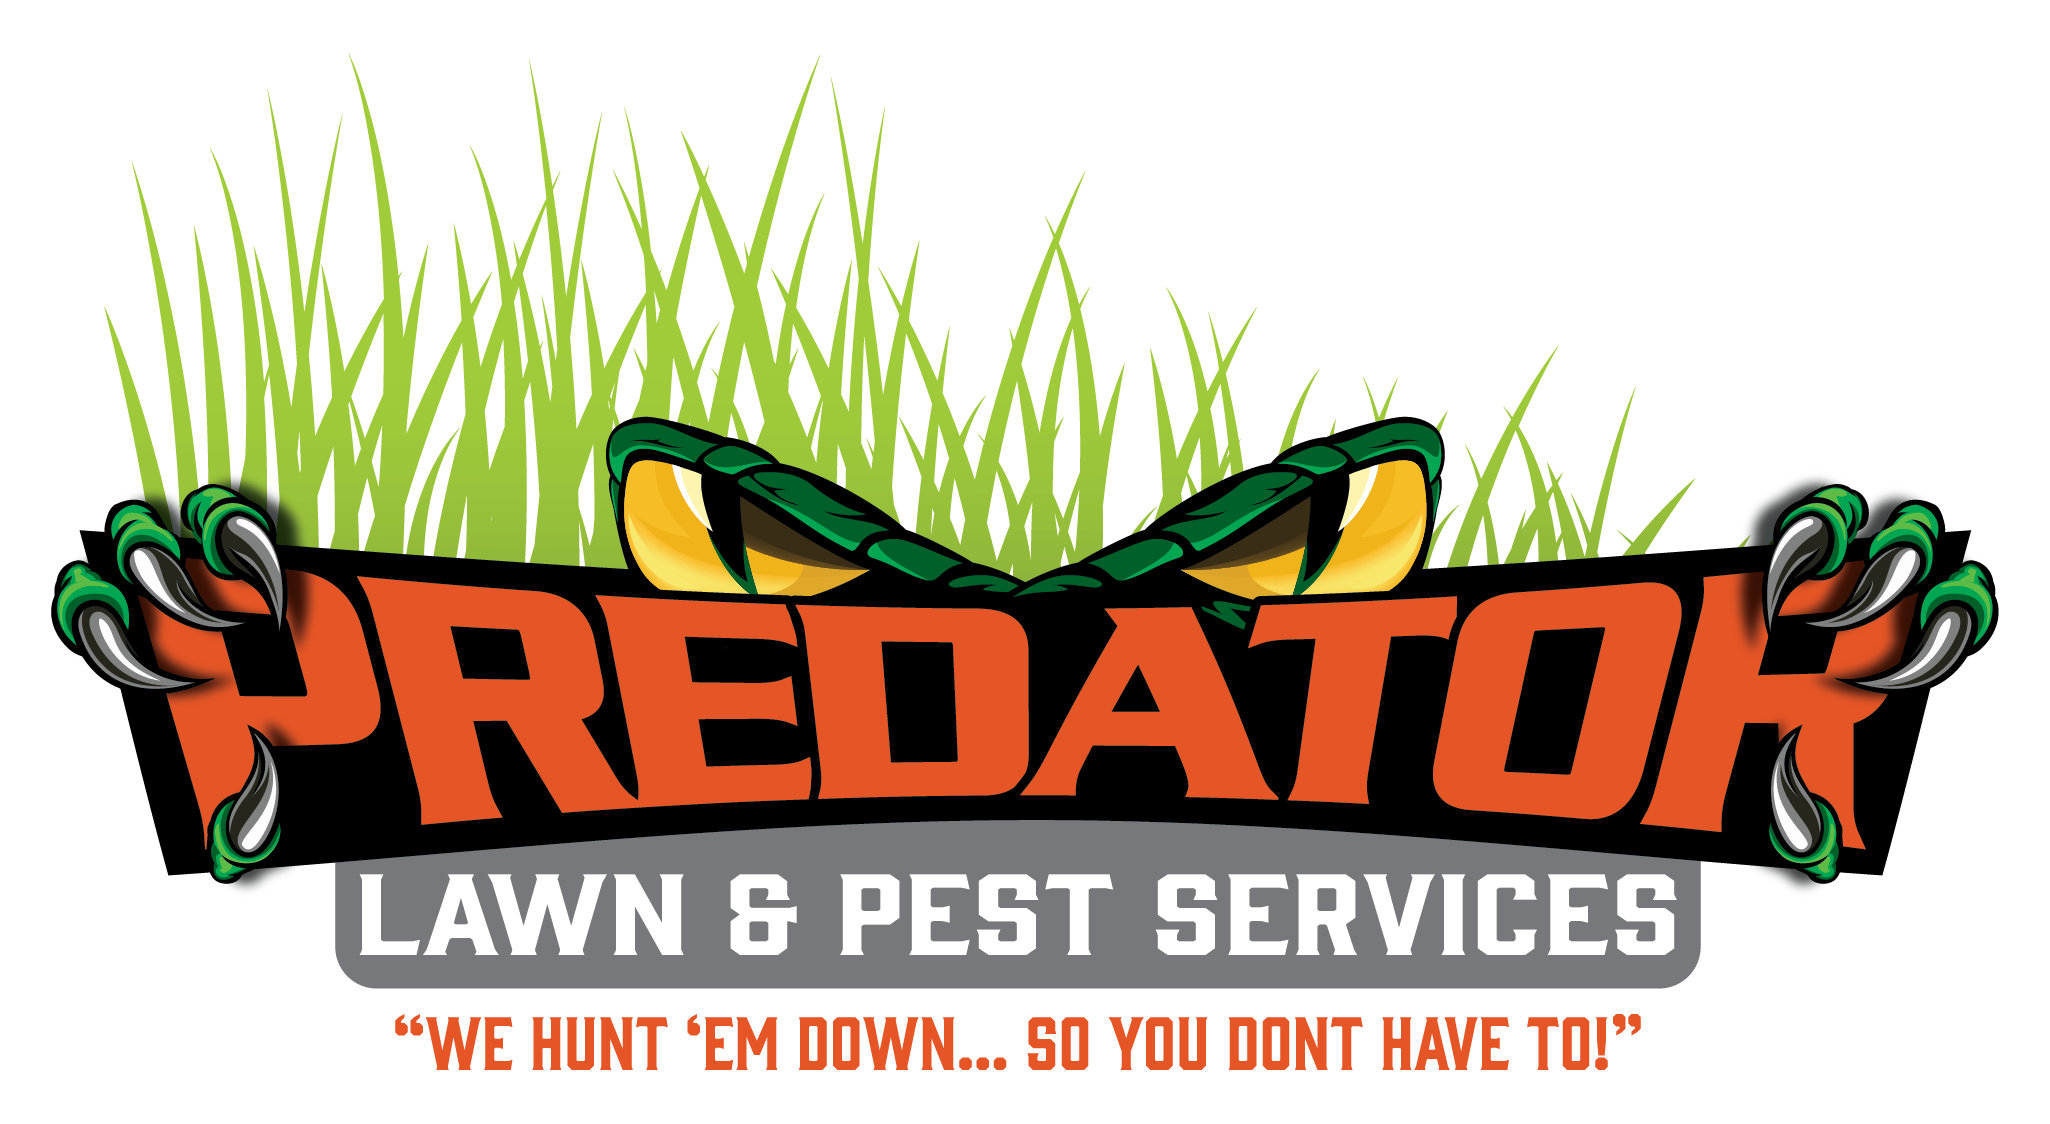 Predator Lawn & Pest Services